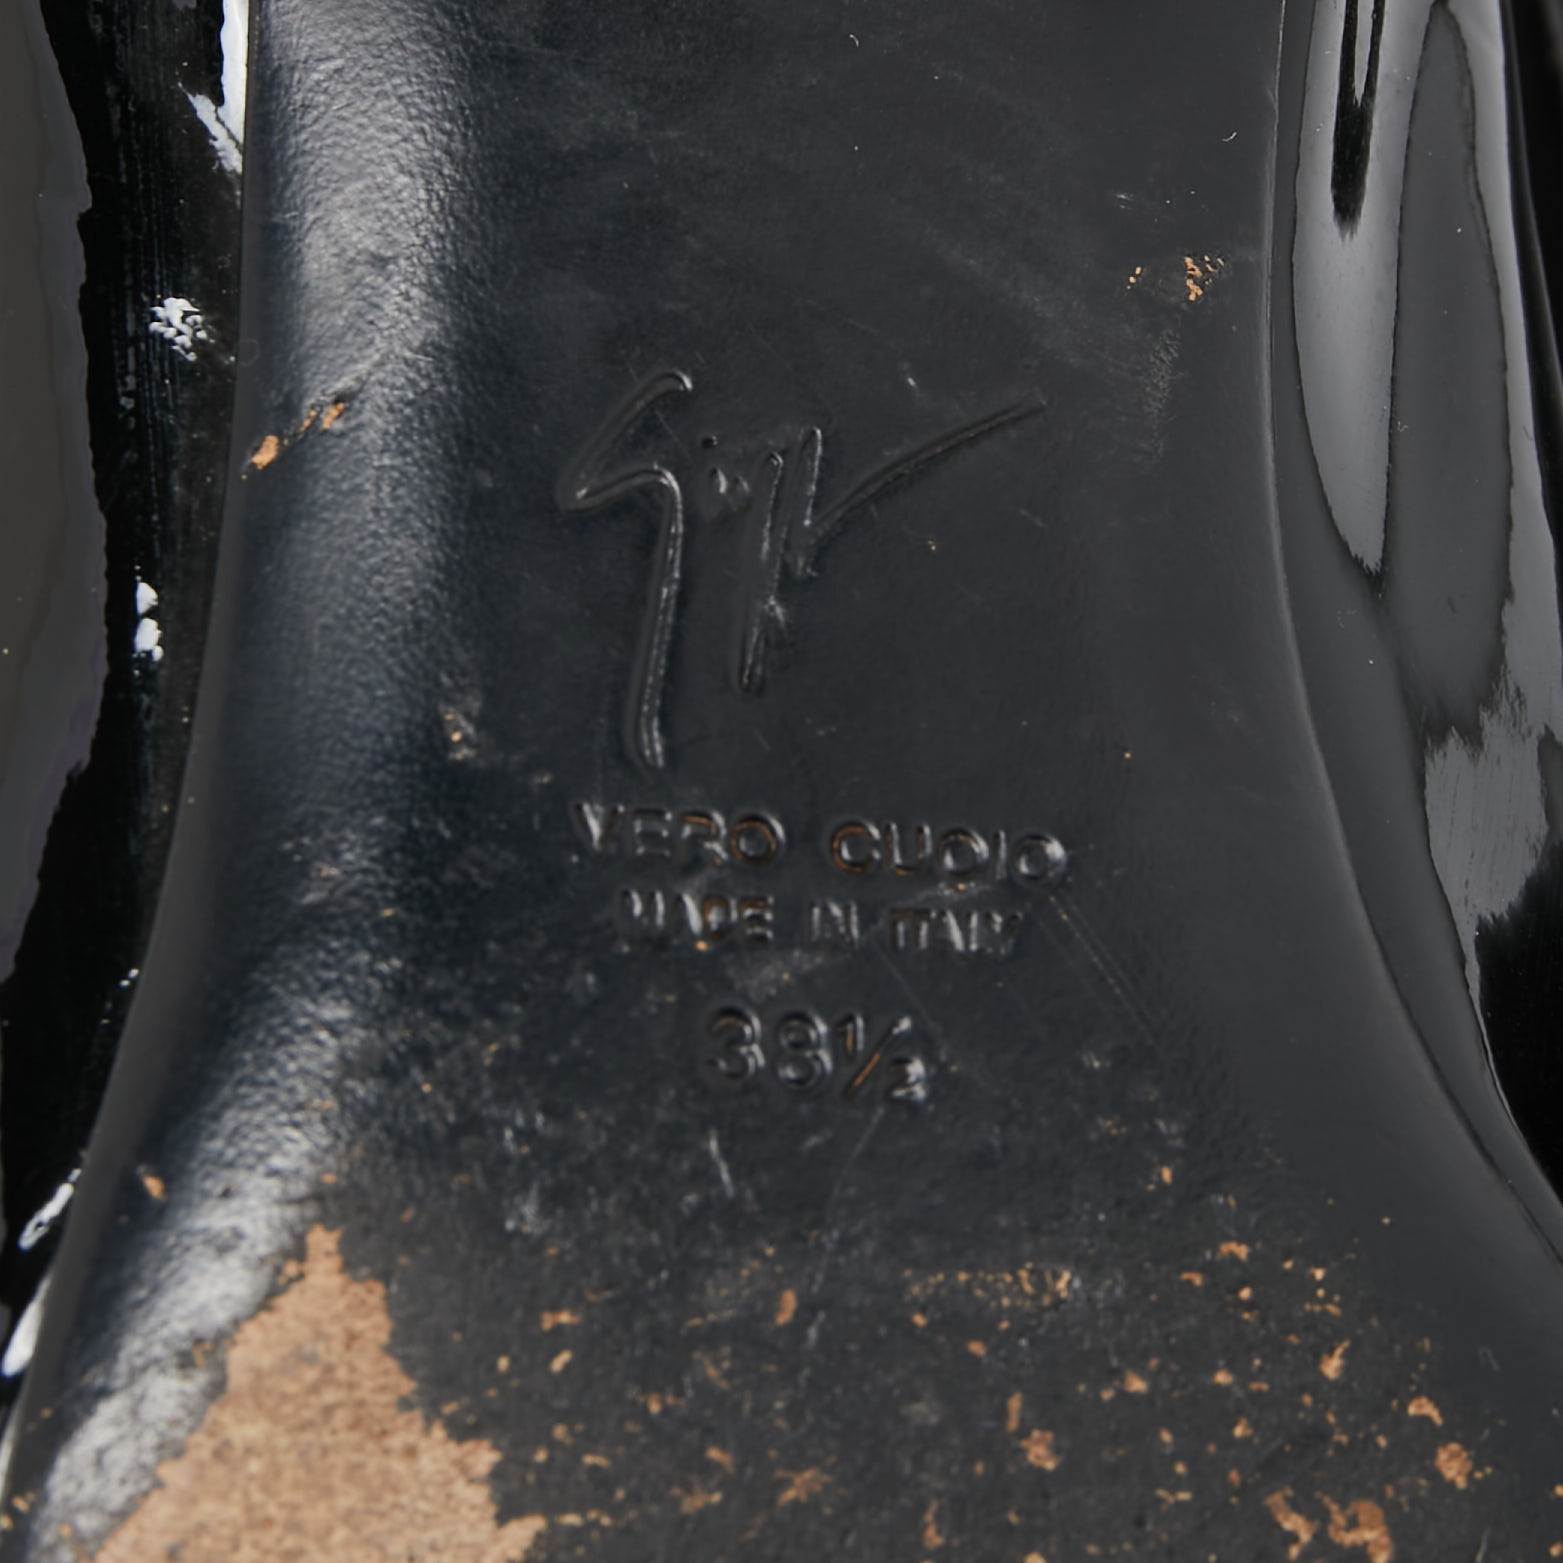 Giuseppe Zanotti Black Patent Leather Spiked Cap Toe Ballet Flats Size 38.5